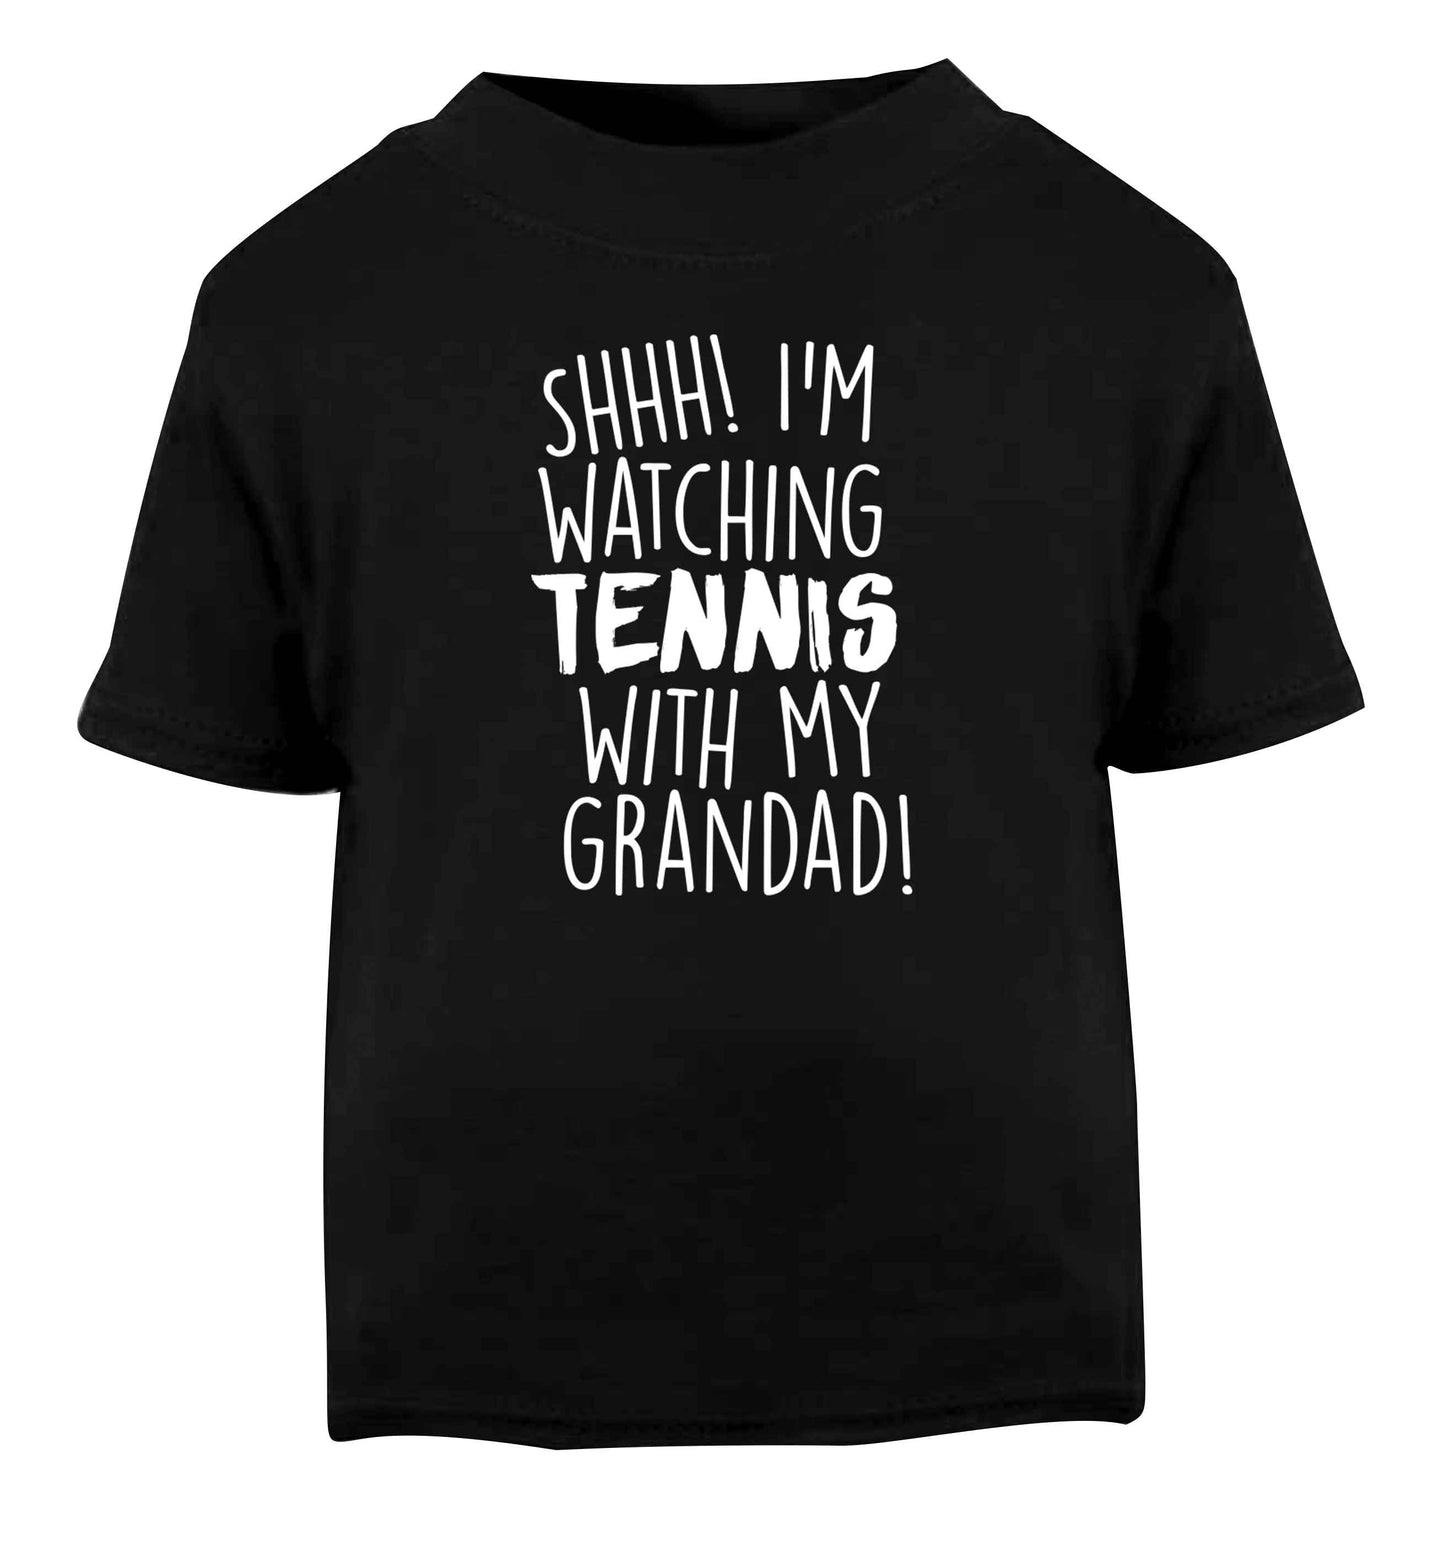 Shh! I'm watching tennis with my grandad! Black Baby Toddler Tshirt 2 years